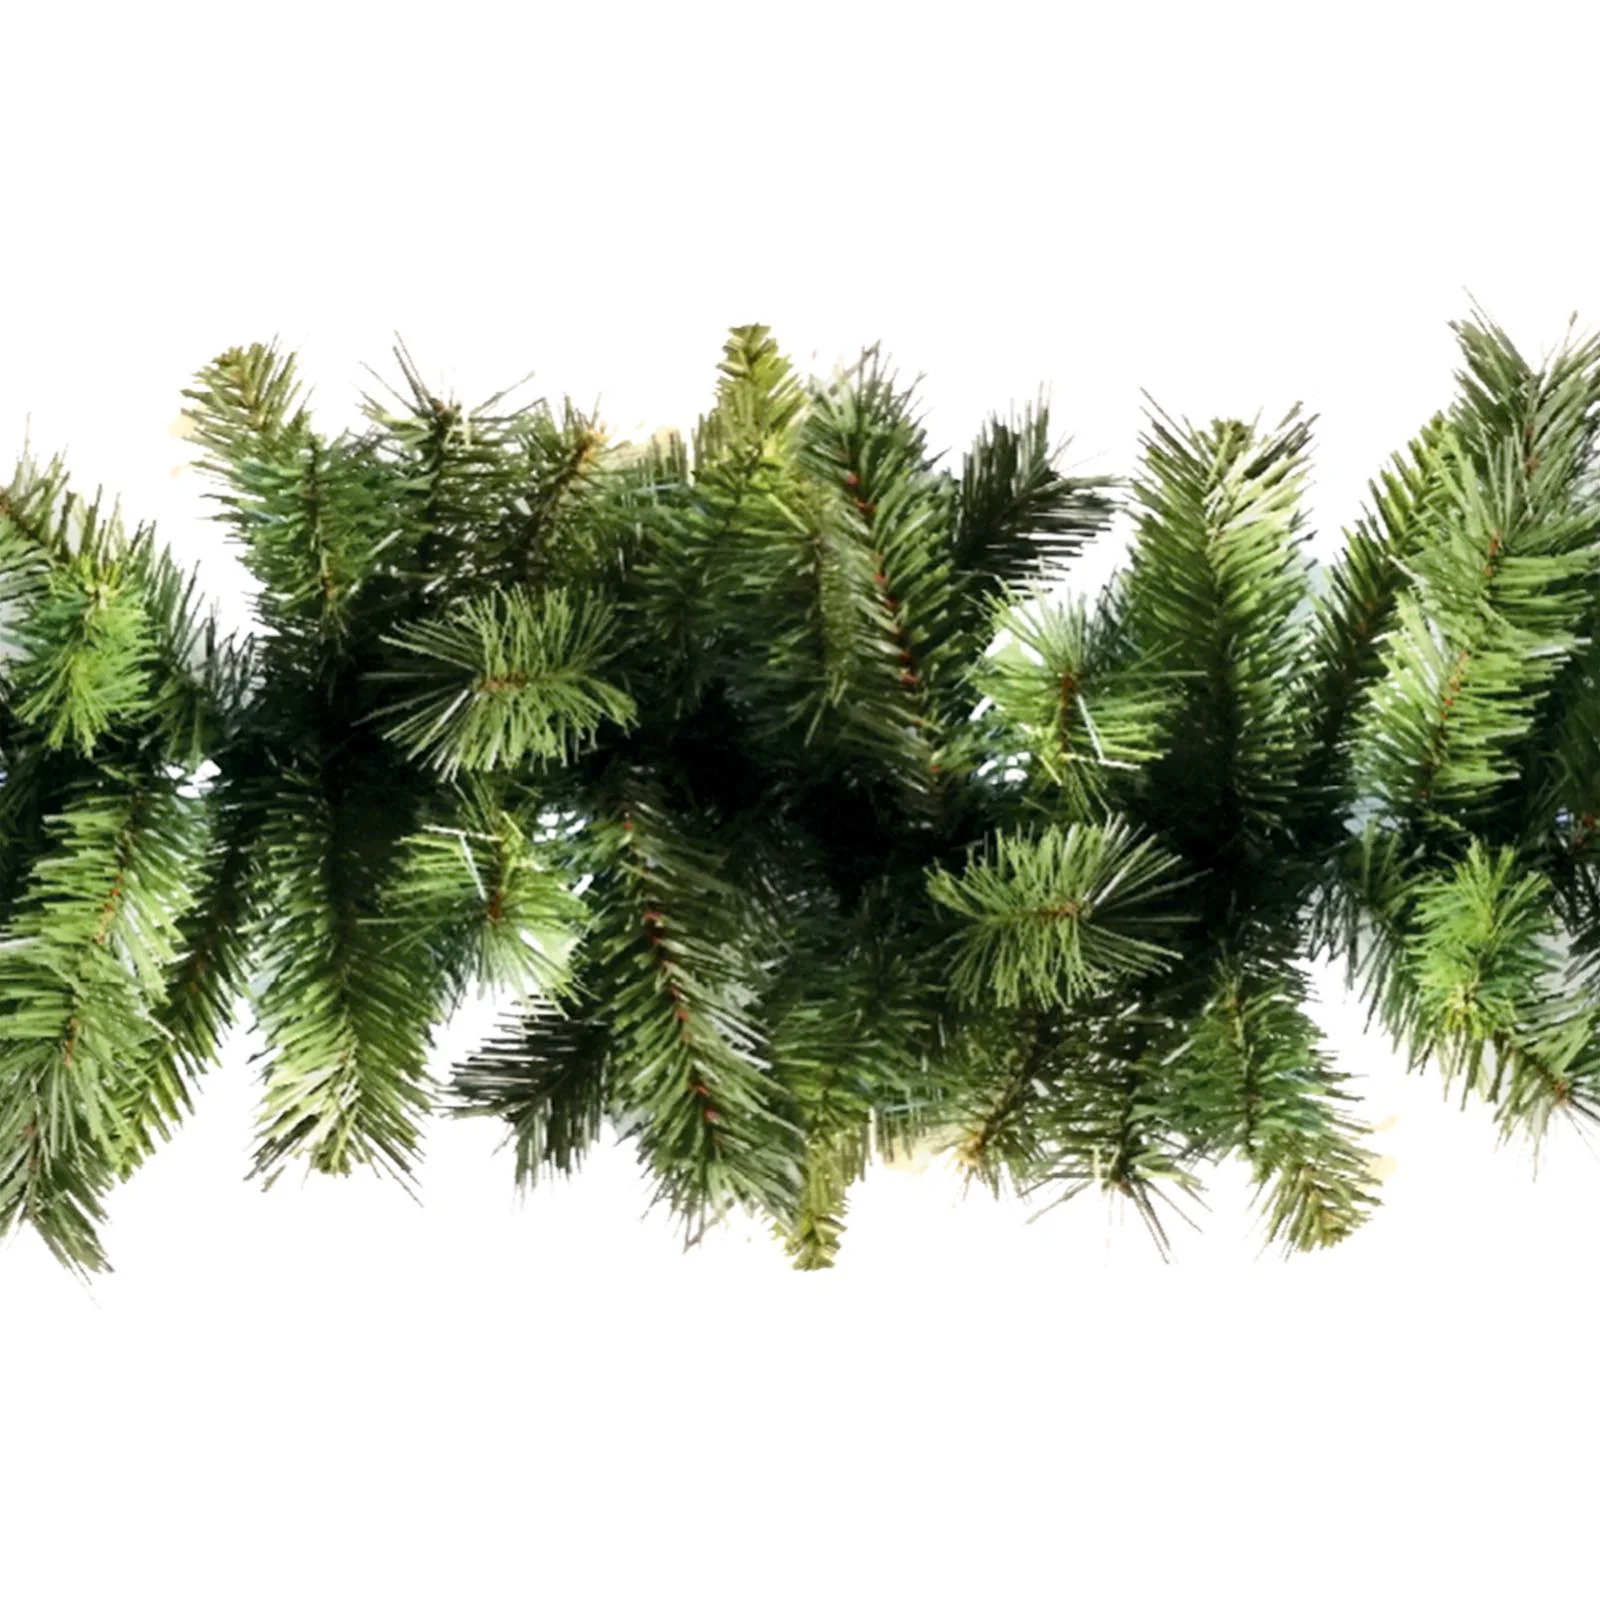 Ghirlanda natalizia festone "Herry" verde artificiale 270cm in pvc 200 rami